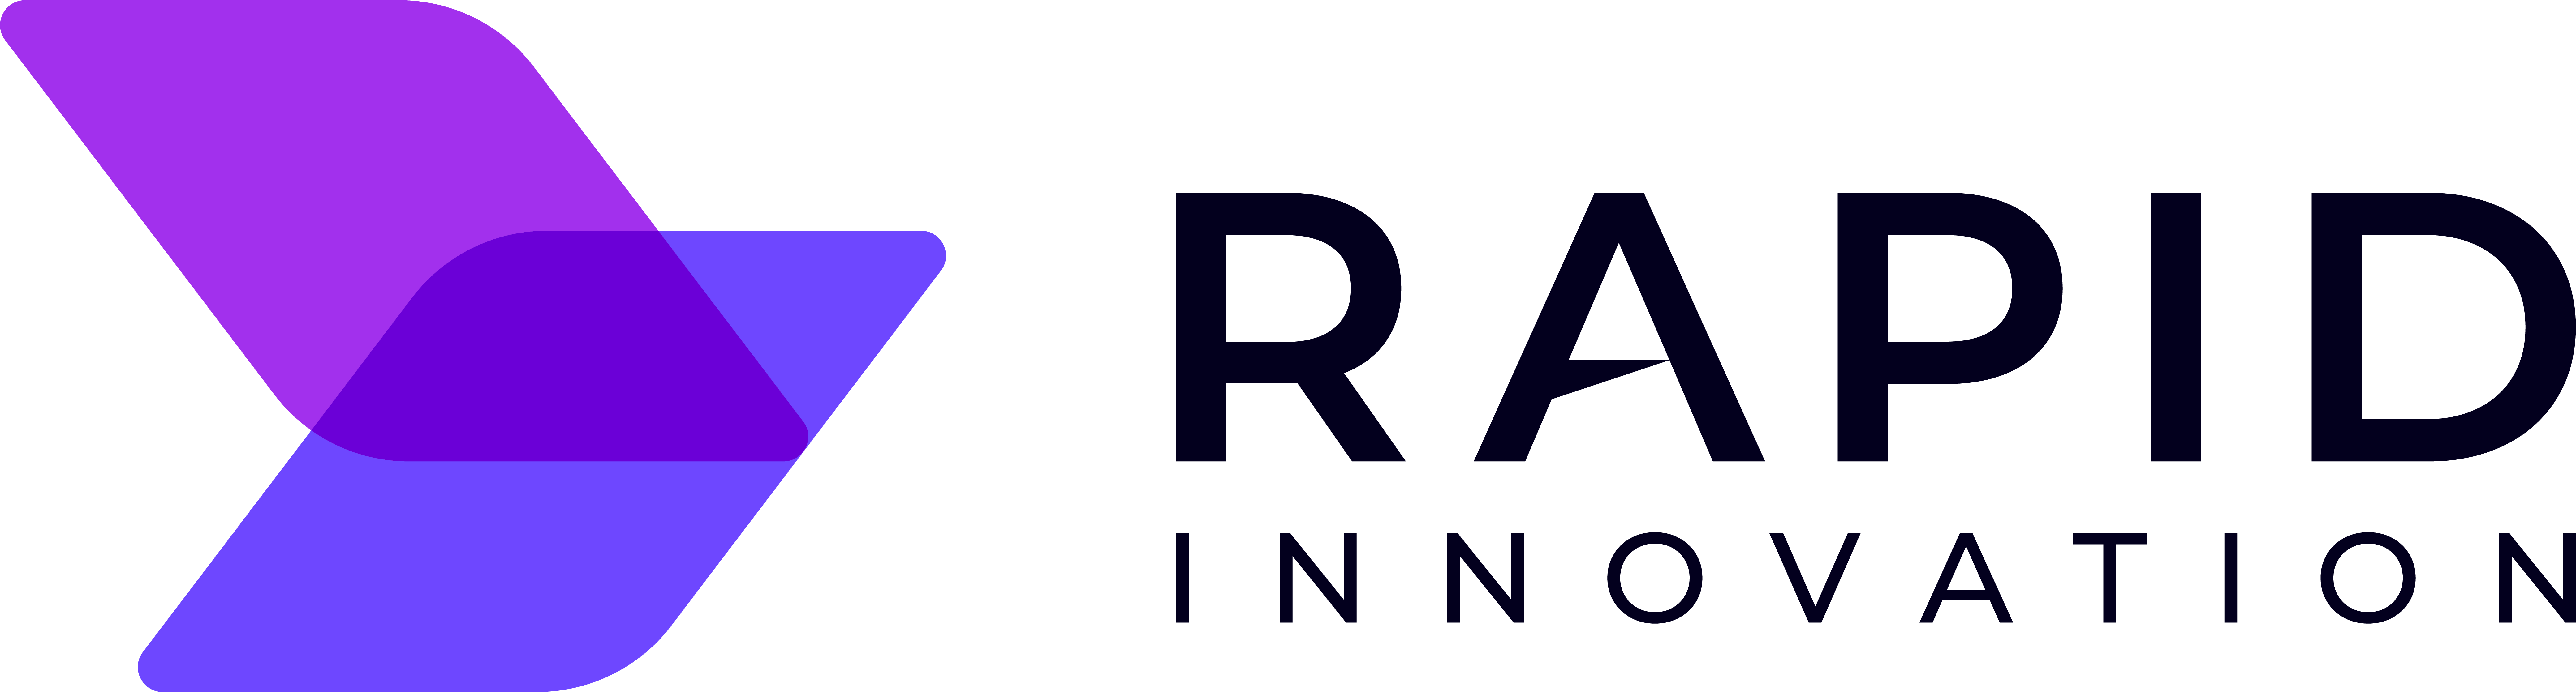 Rapid Innovation Logo.png